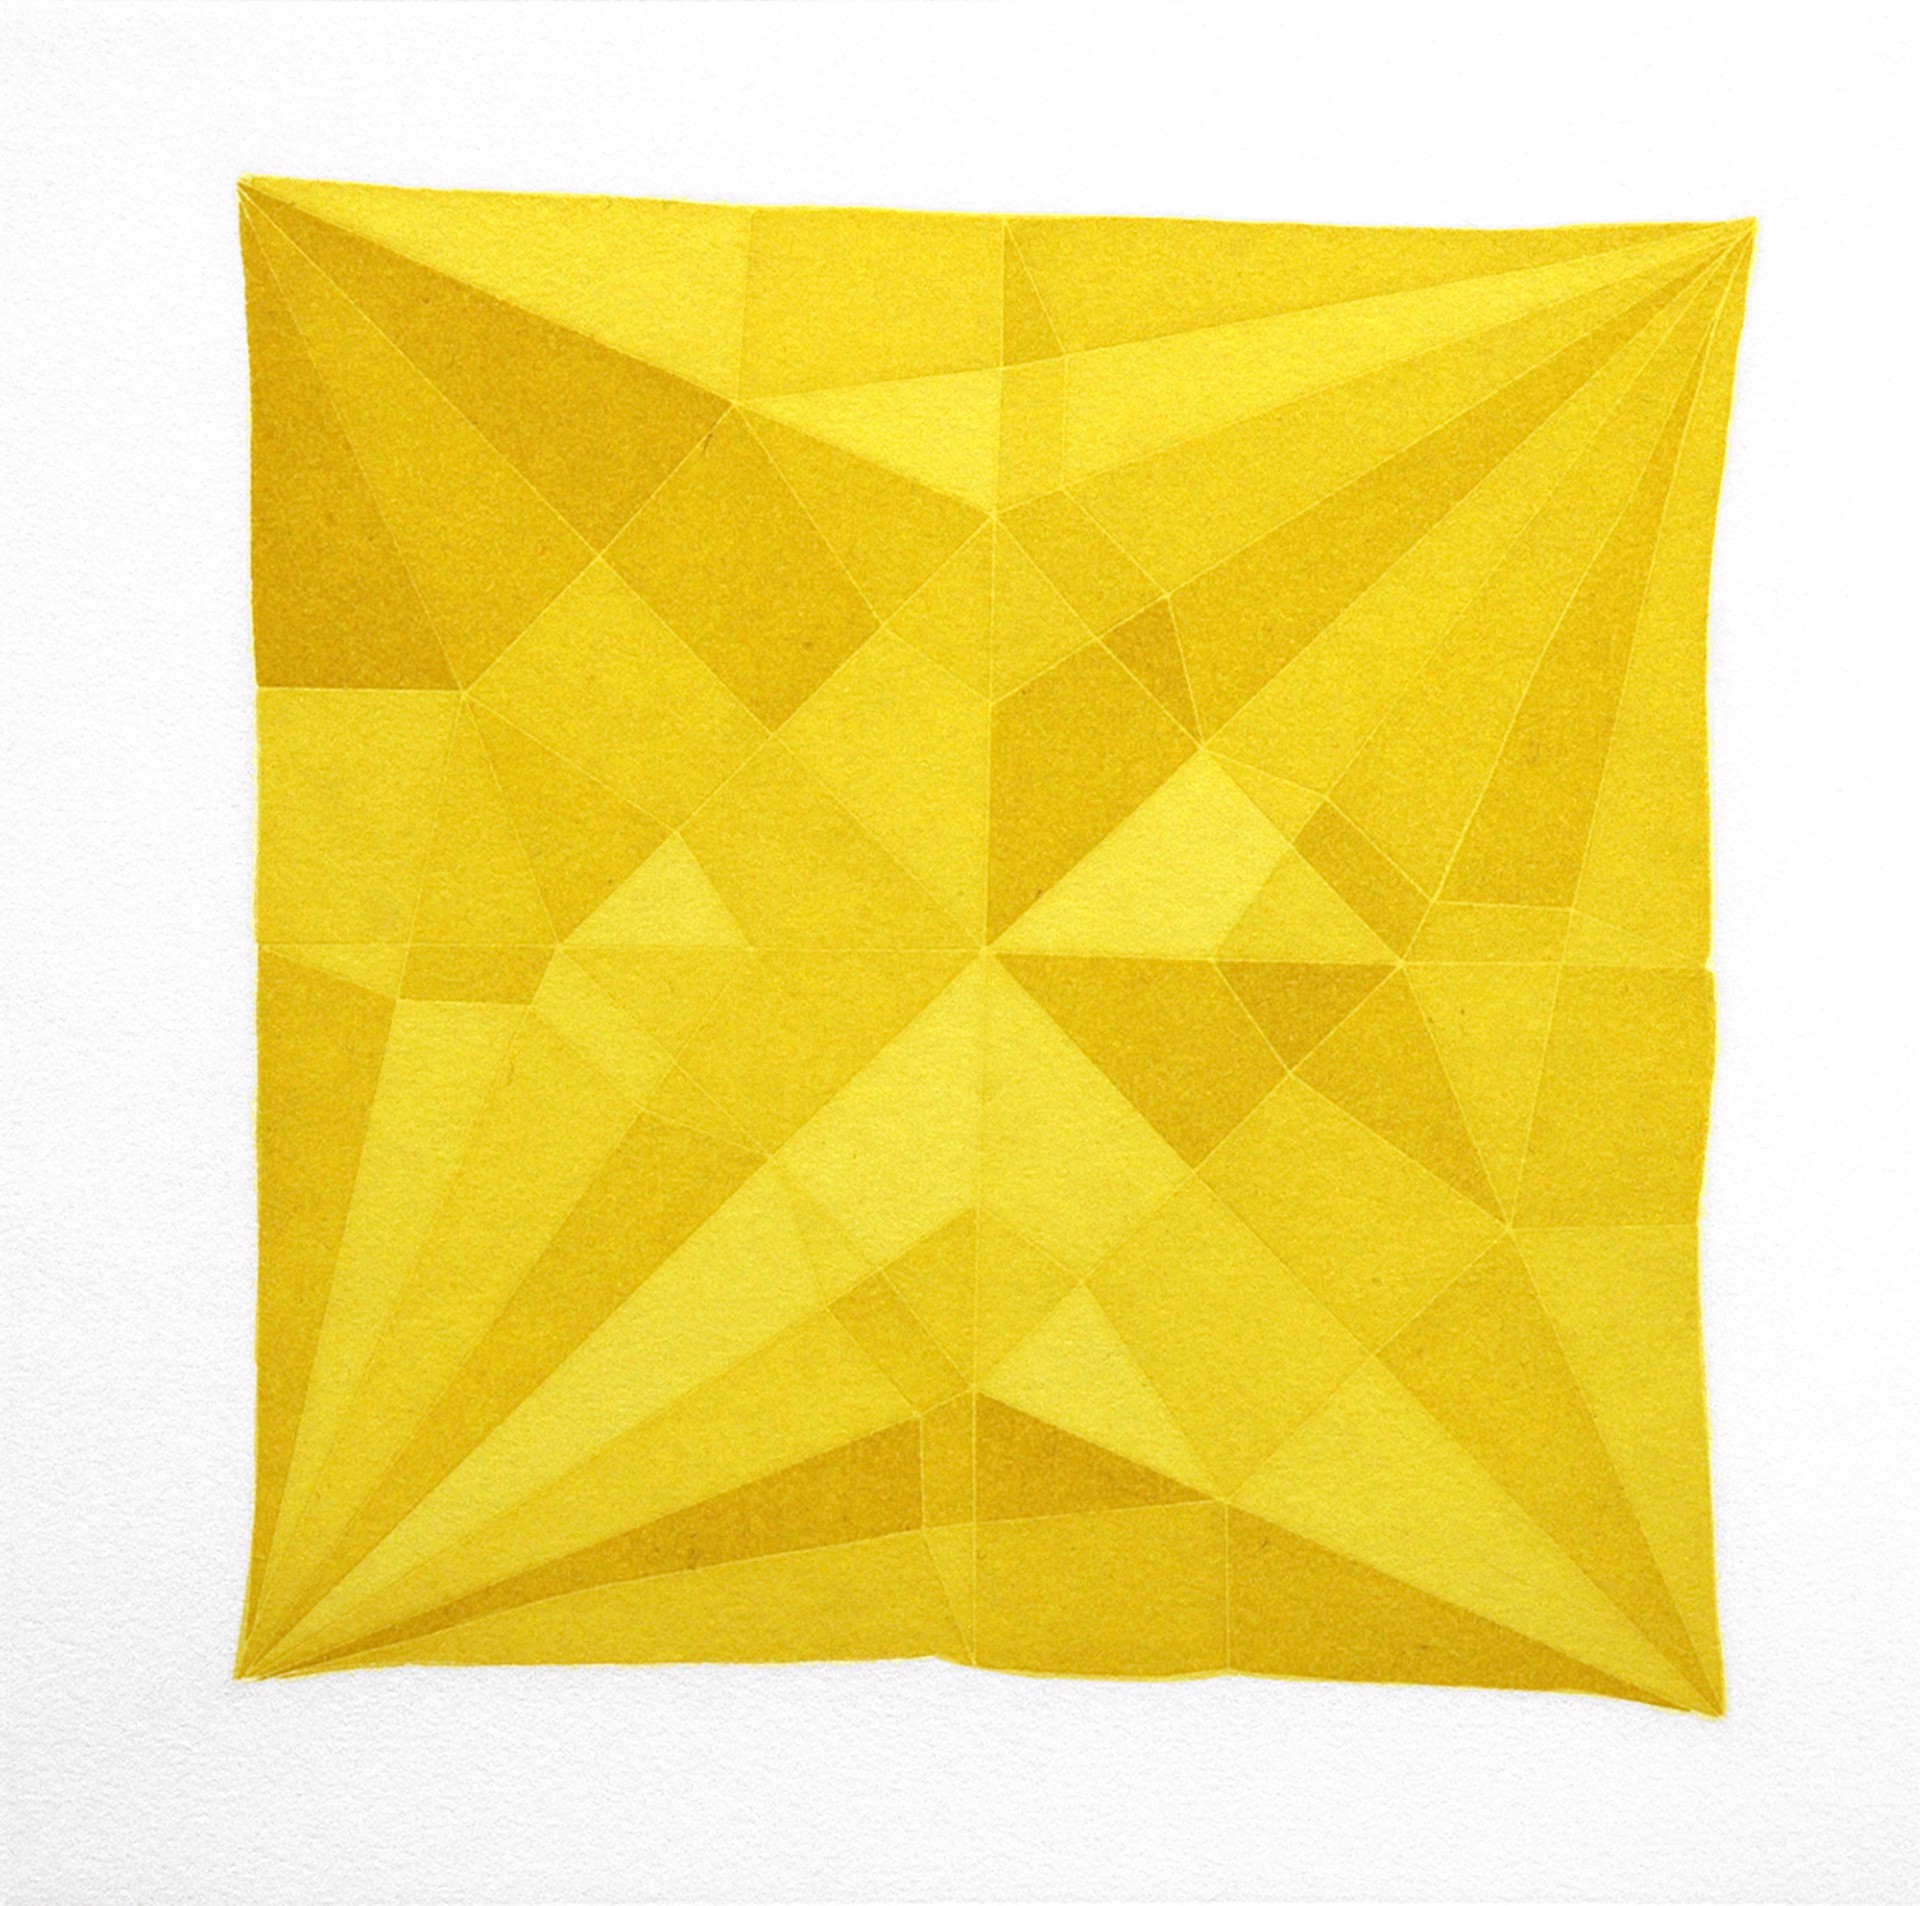 Origami Crane Yellow by Suzanne Frazier